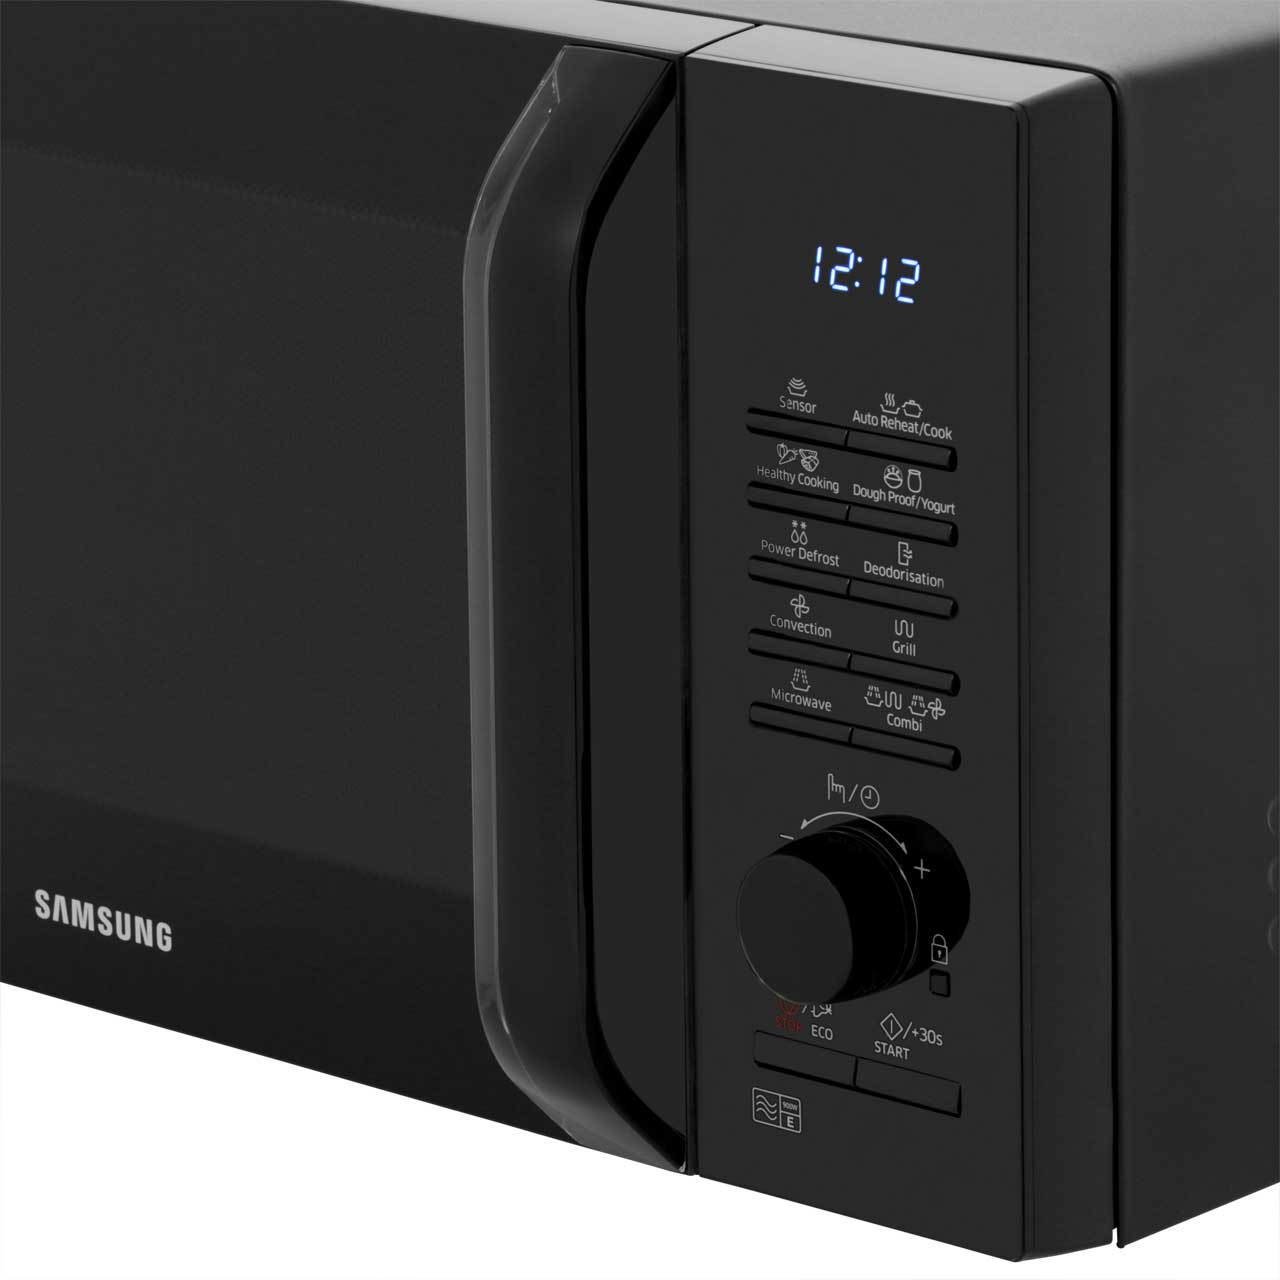 Samsung MC28H5125AK Smart Oven 900 Watt Microwave Free Standing Black